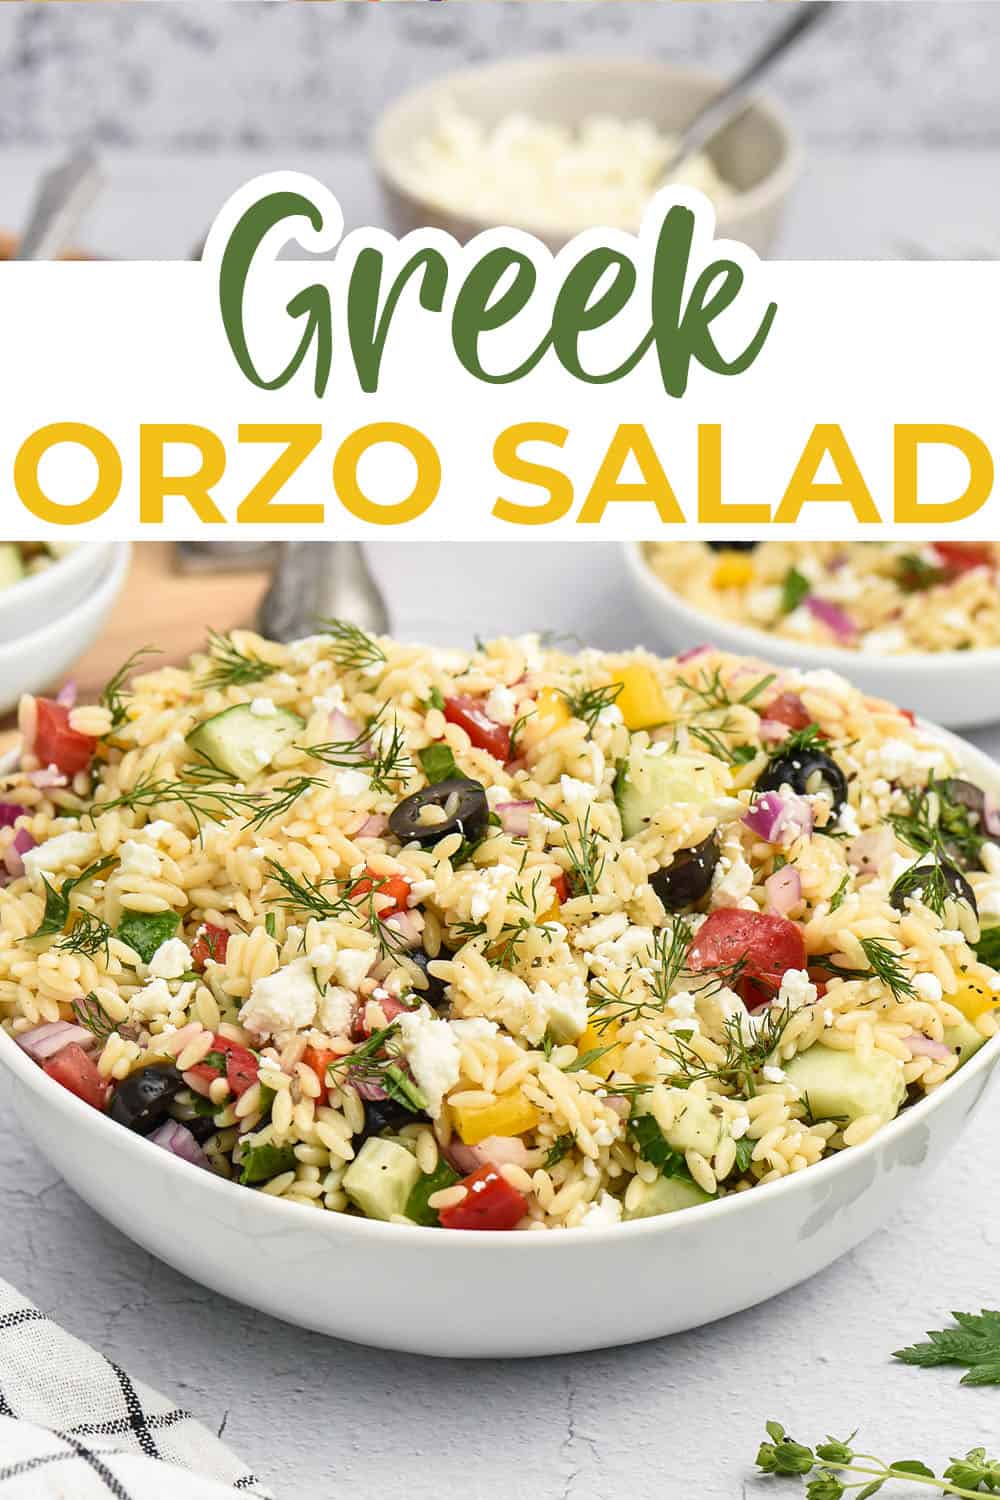 Greek orzo salad in white bowl.